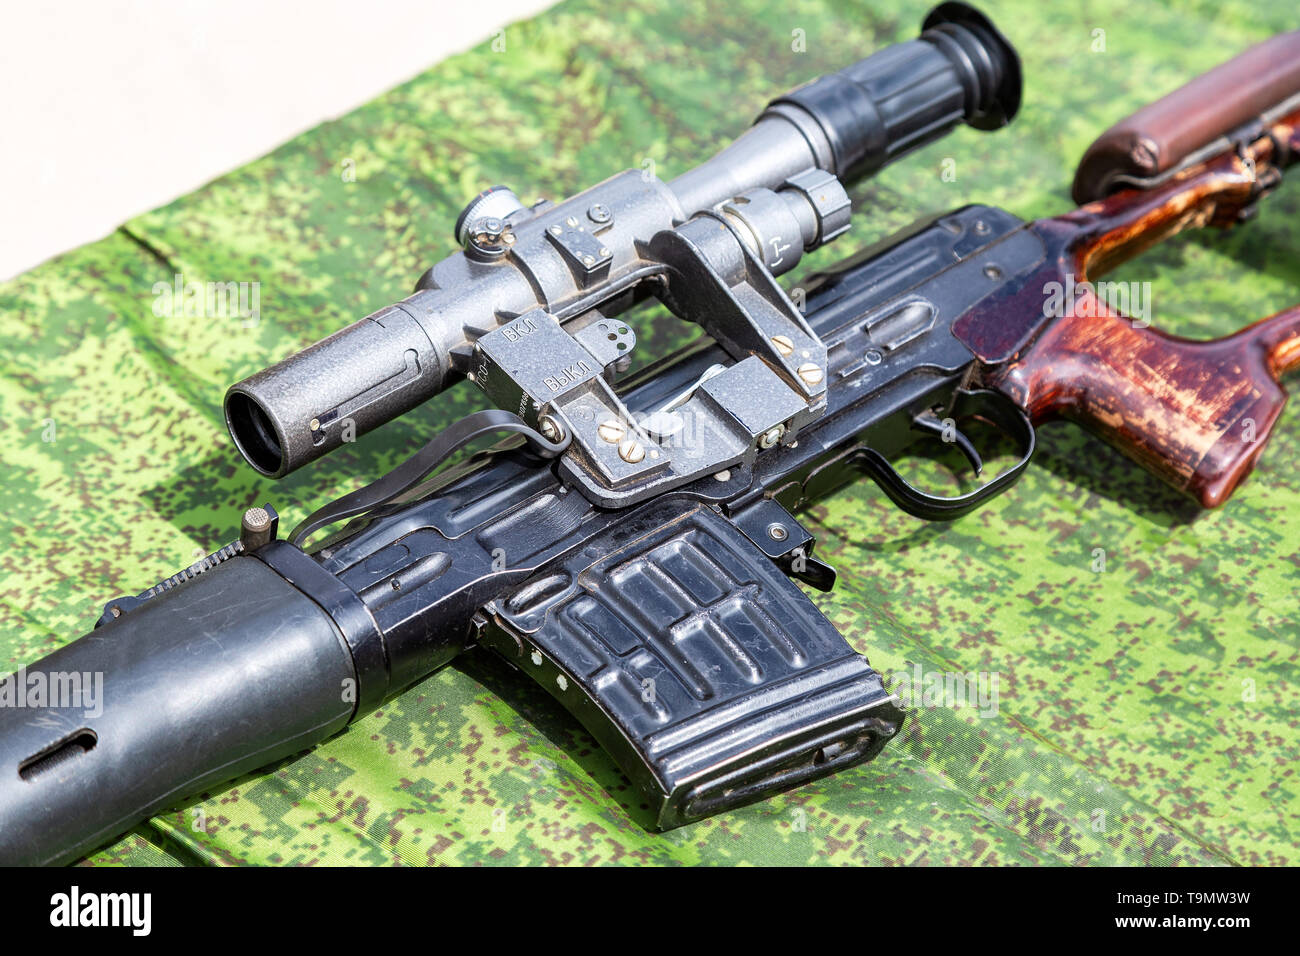 Samara, Russia - May 18, 2019: Optic sight of Russian automatic  sniper rifle close up Stock Photo